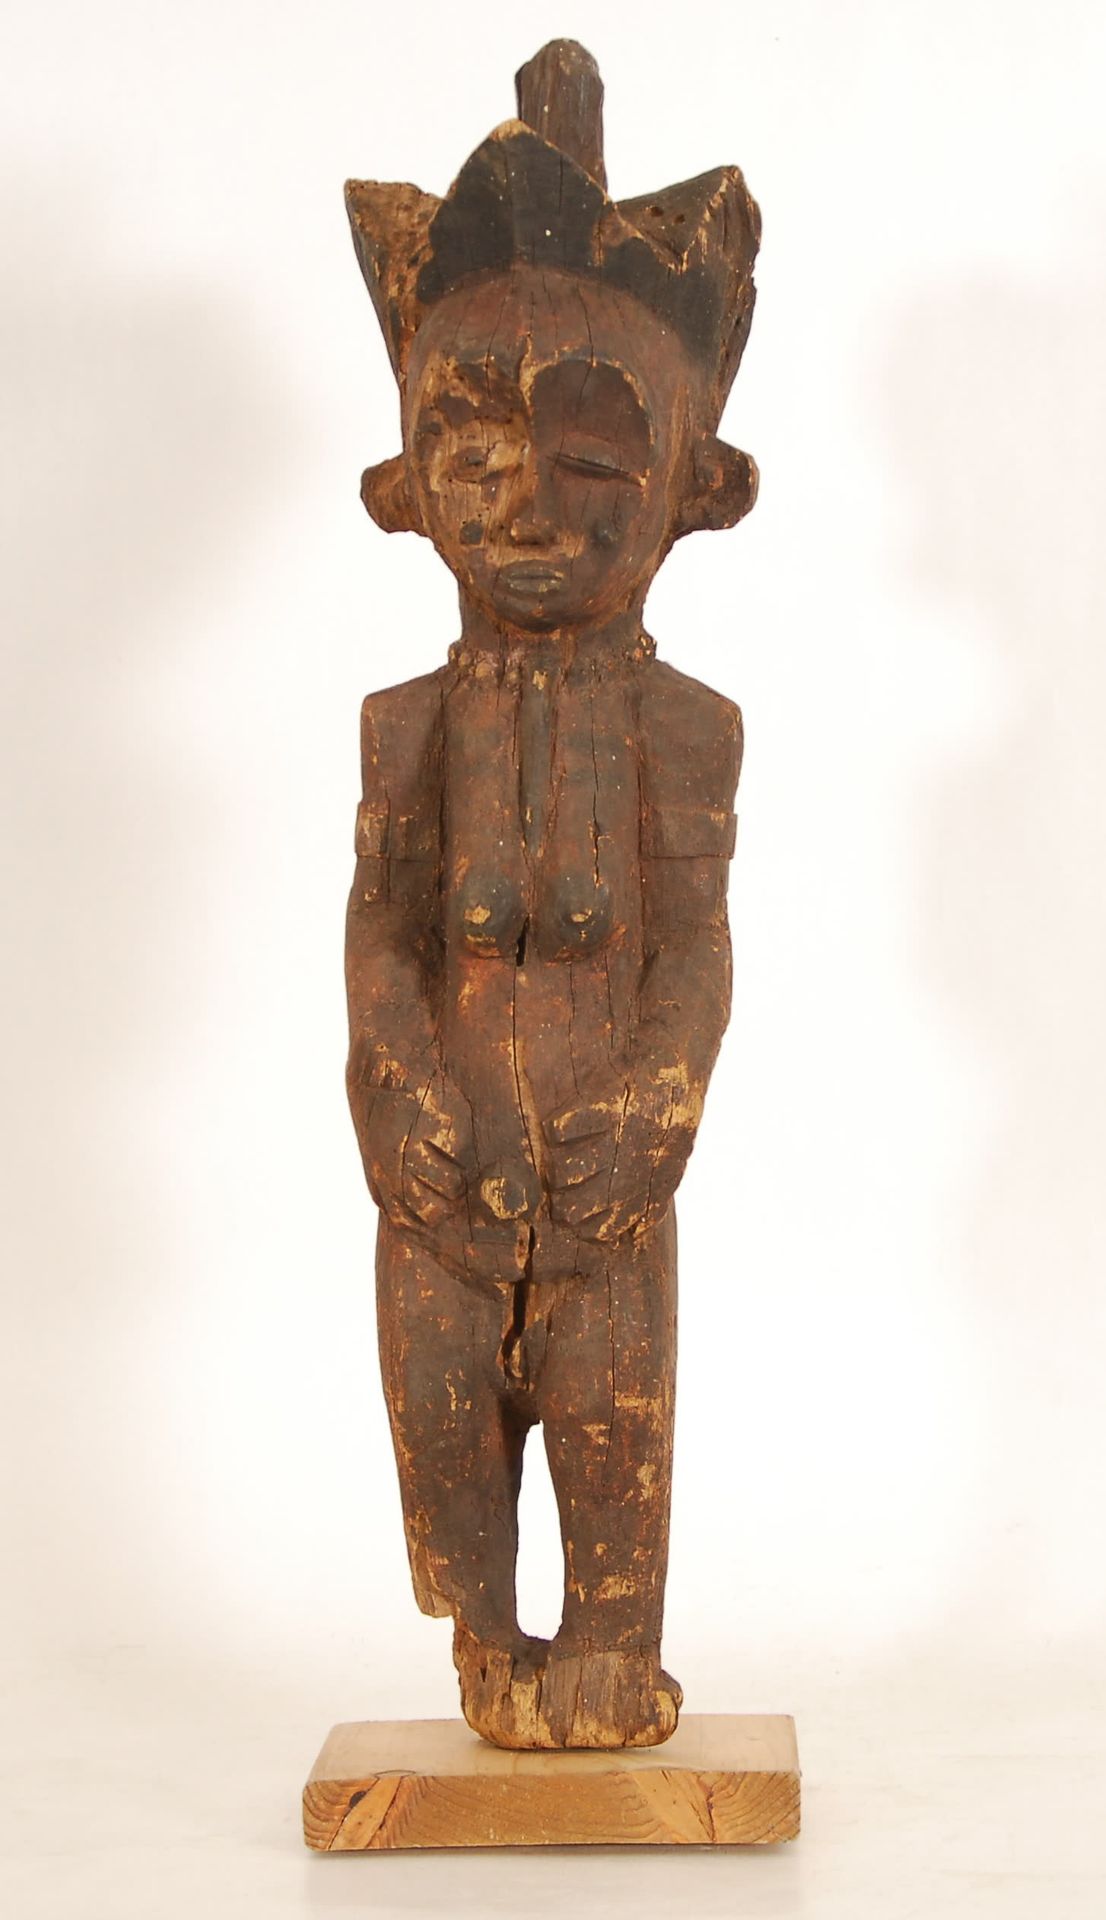 Afrique - Africa Pende figure
Sculpted wood. Democratic Republic of Congo.
H. 68&hellip;